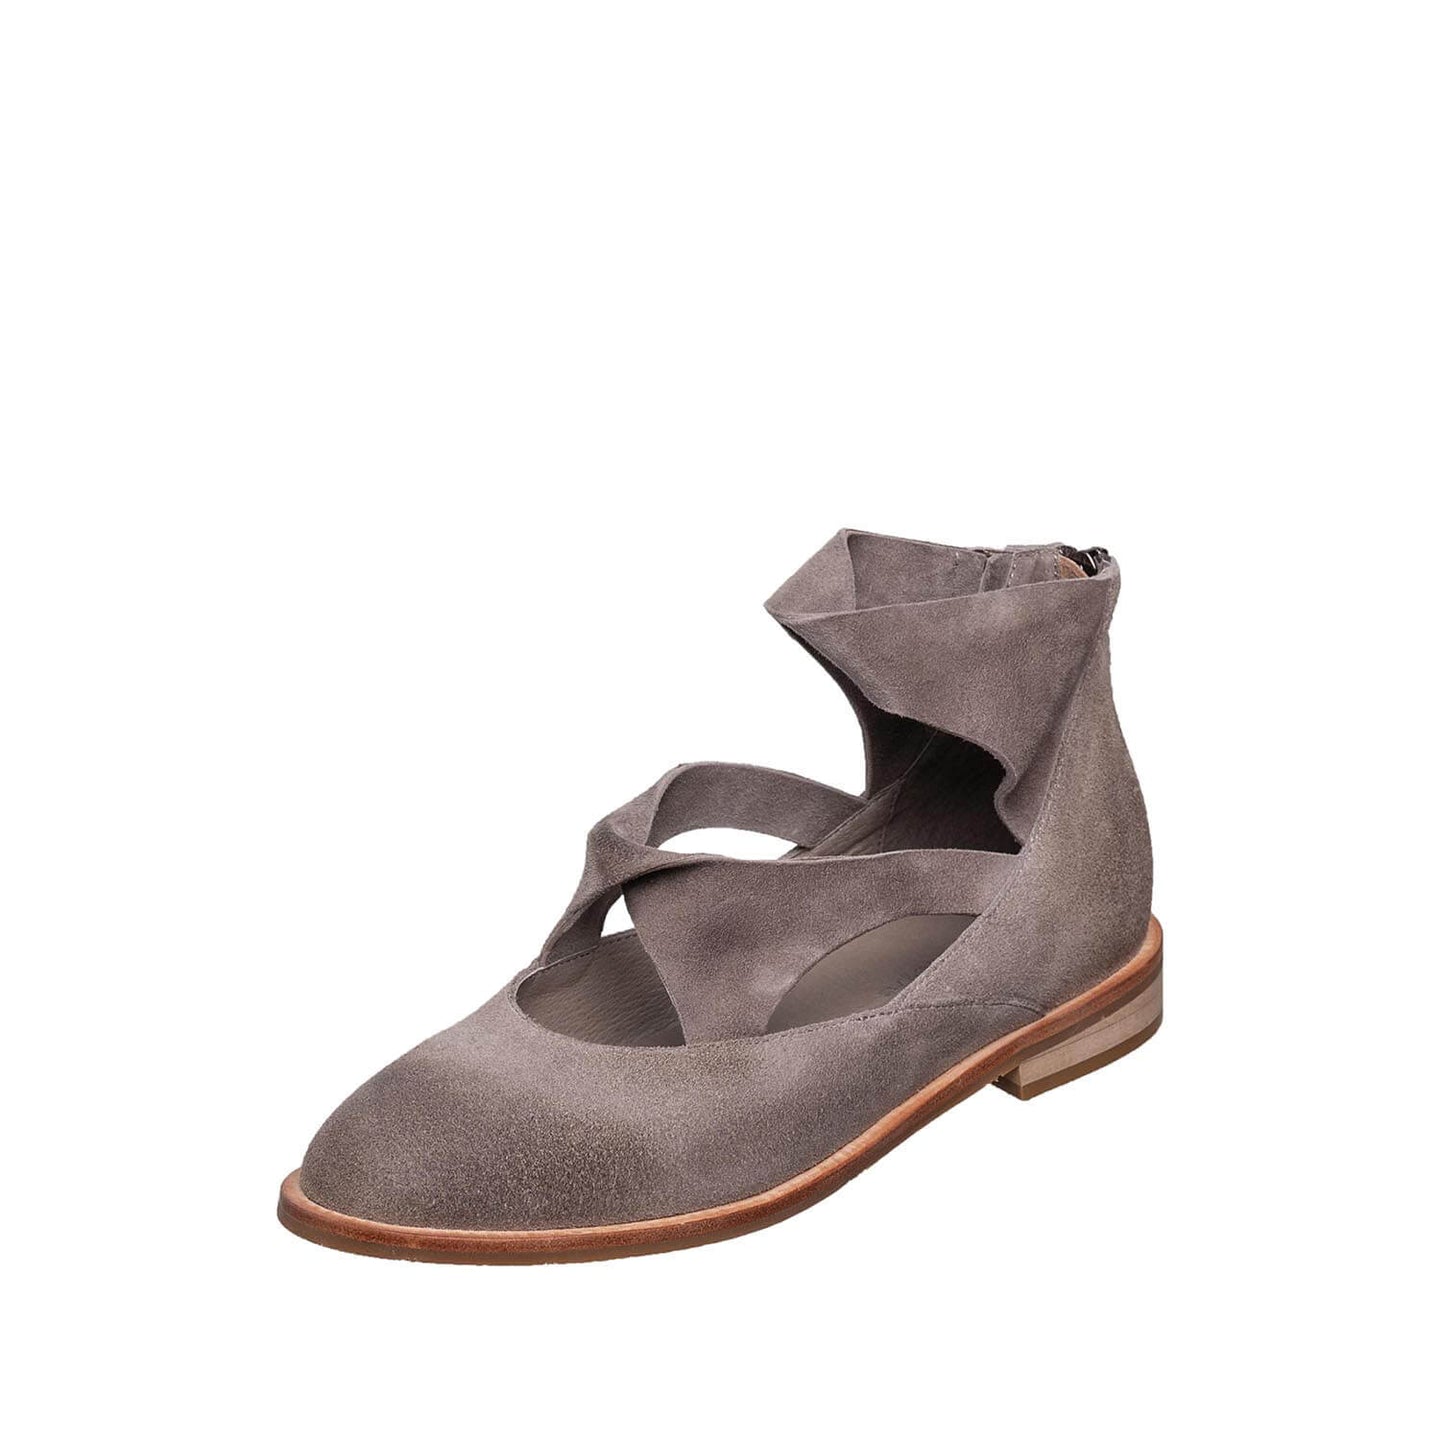 K11 Lalana Comfortable Low Heel Boots - Light Grey